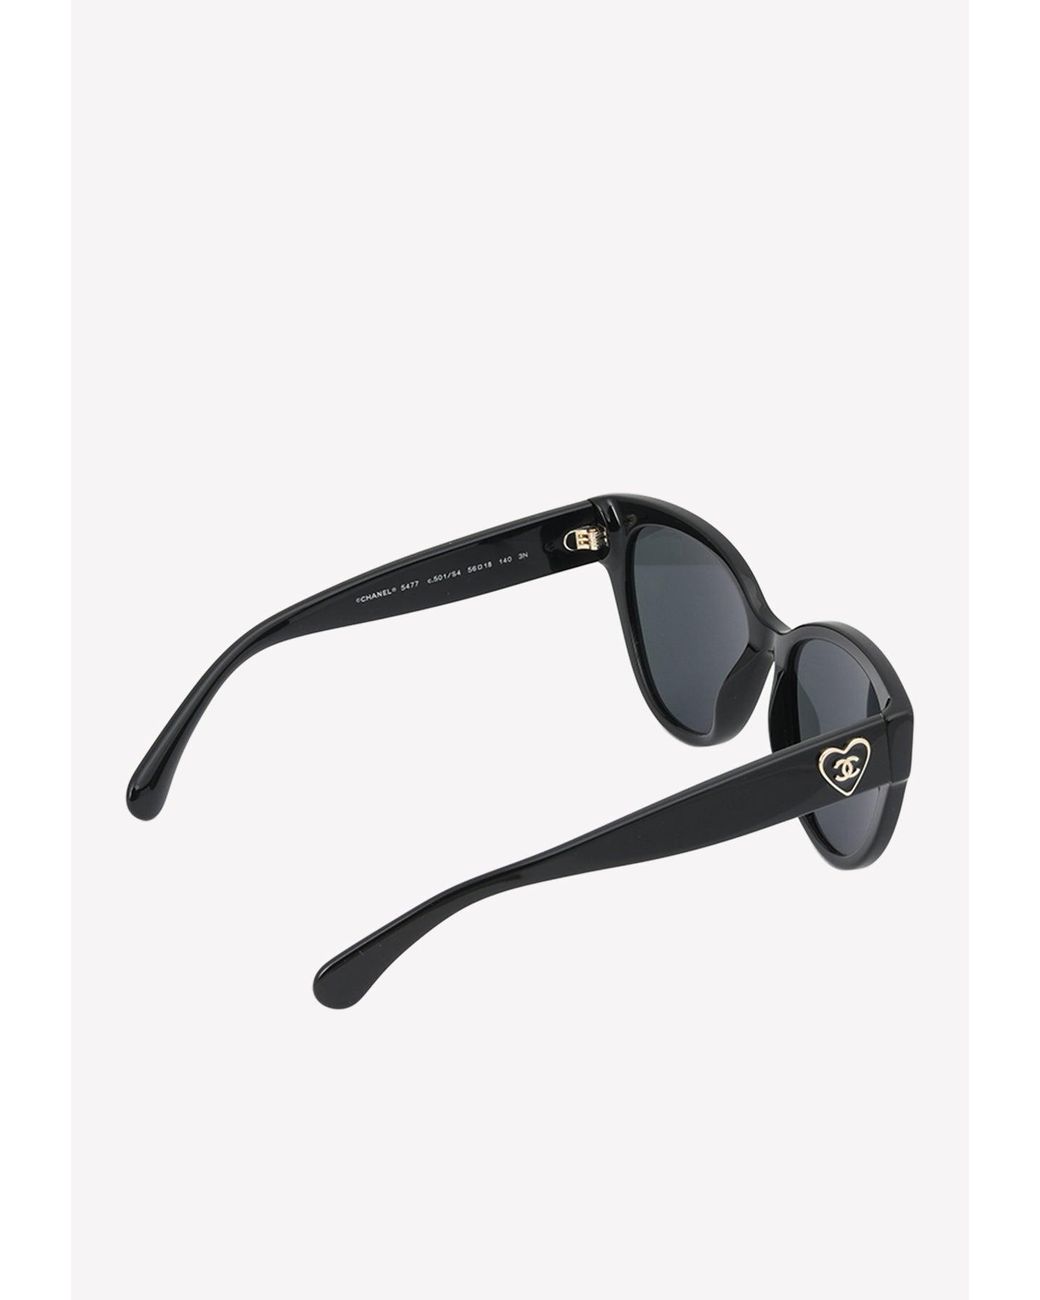 Chanel Butterfly Sunglasses CH5477 56 Grey & Black Sunglasses